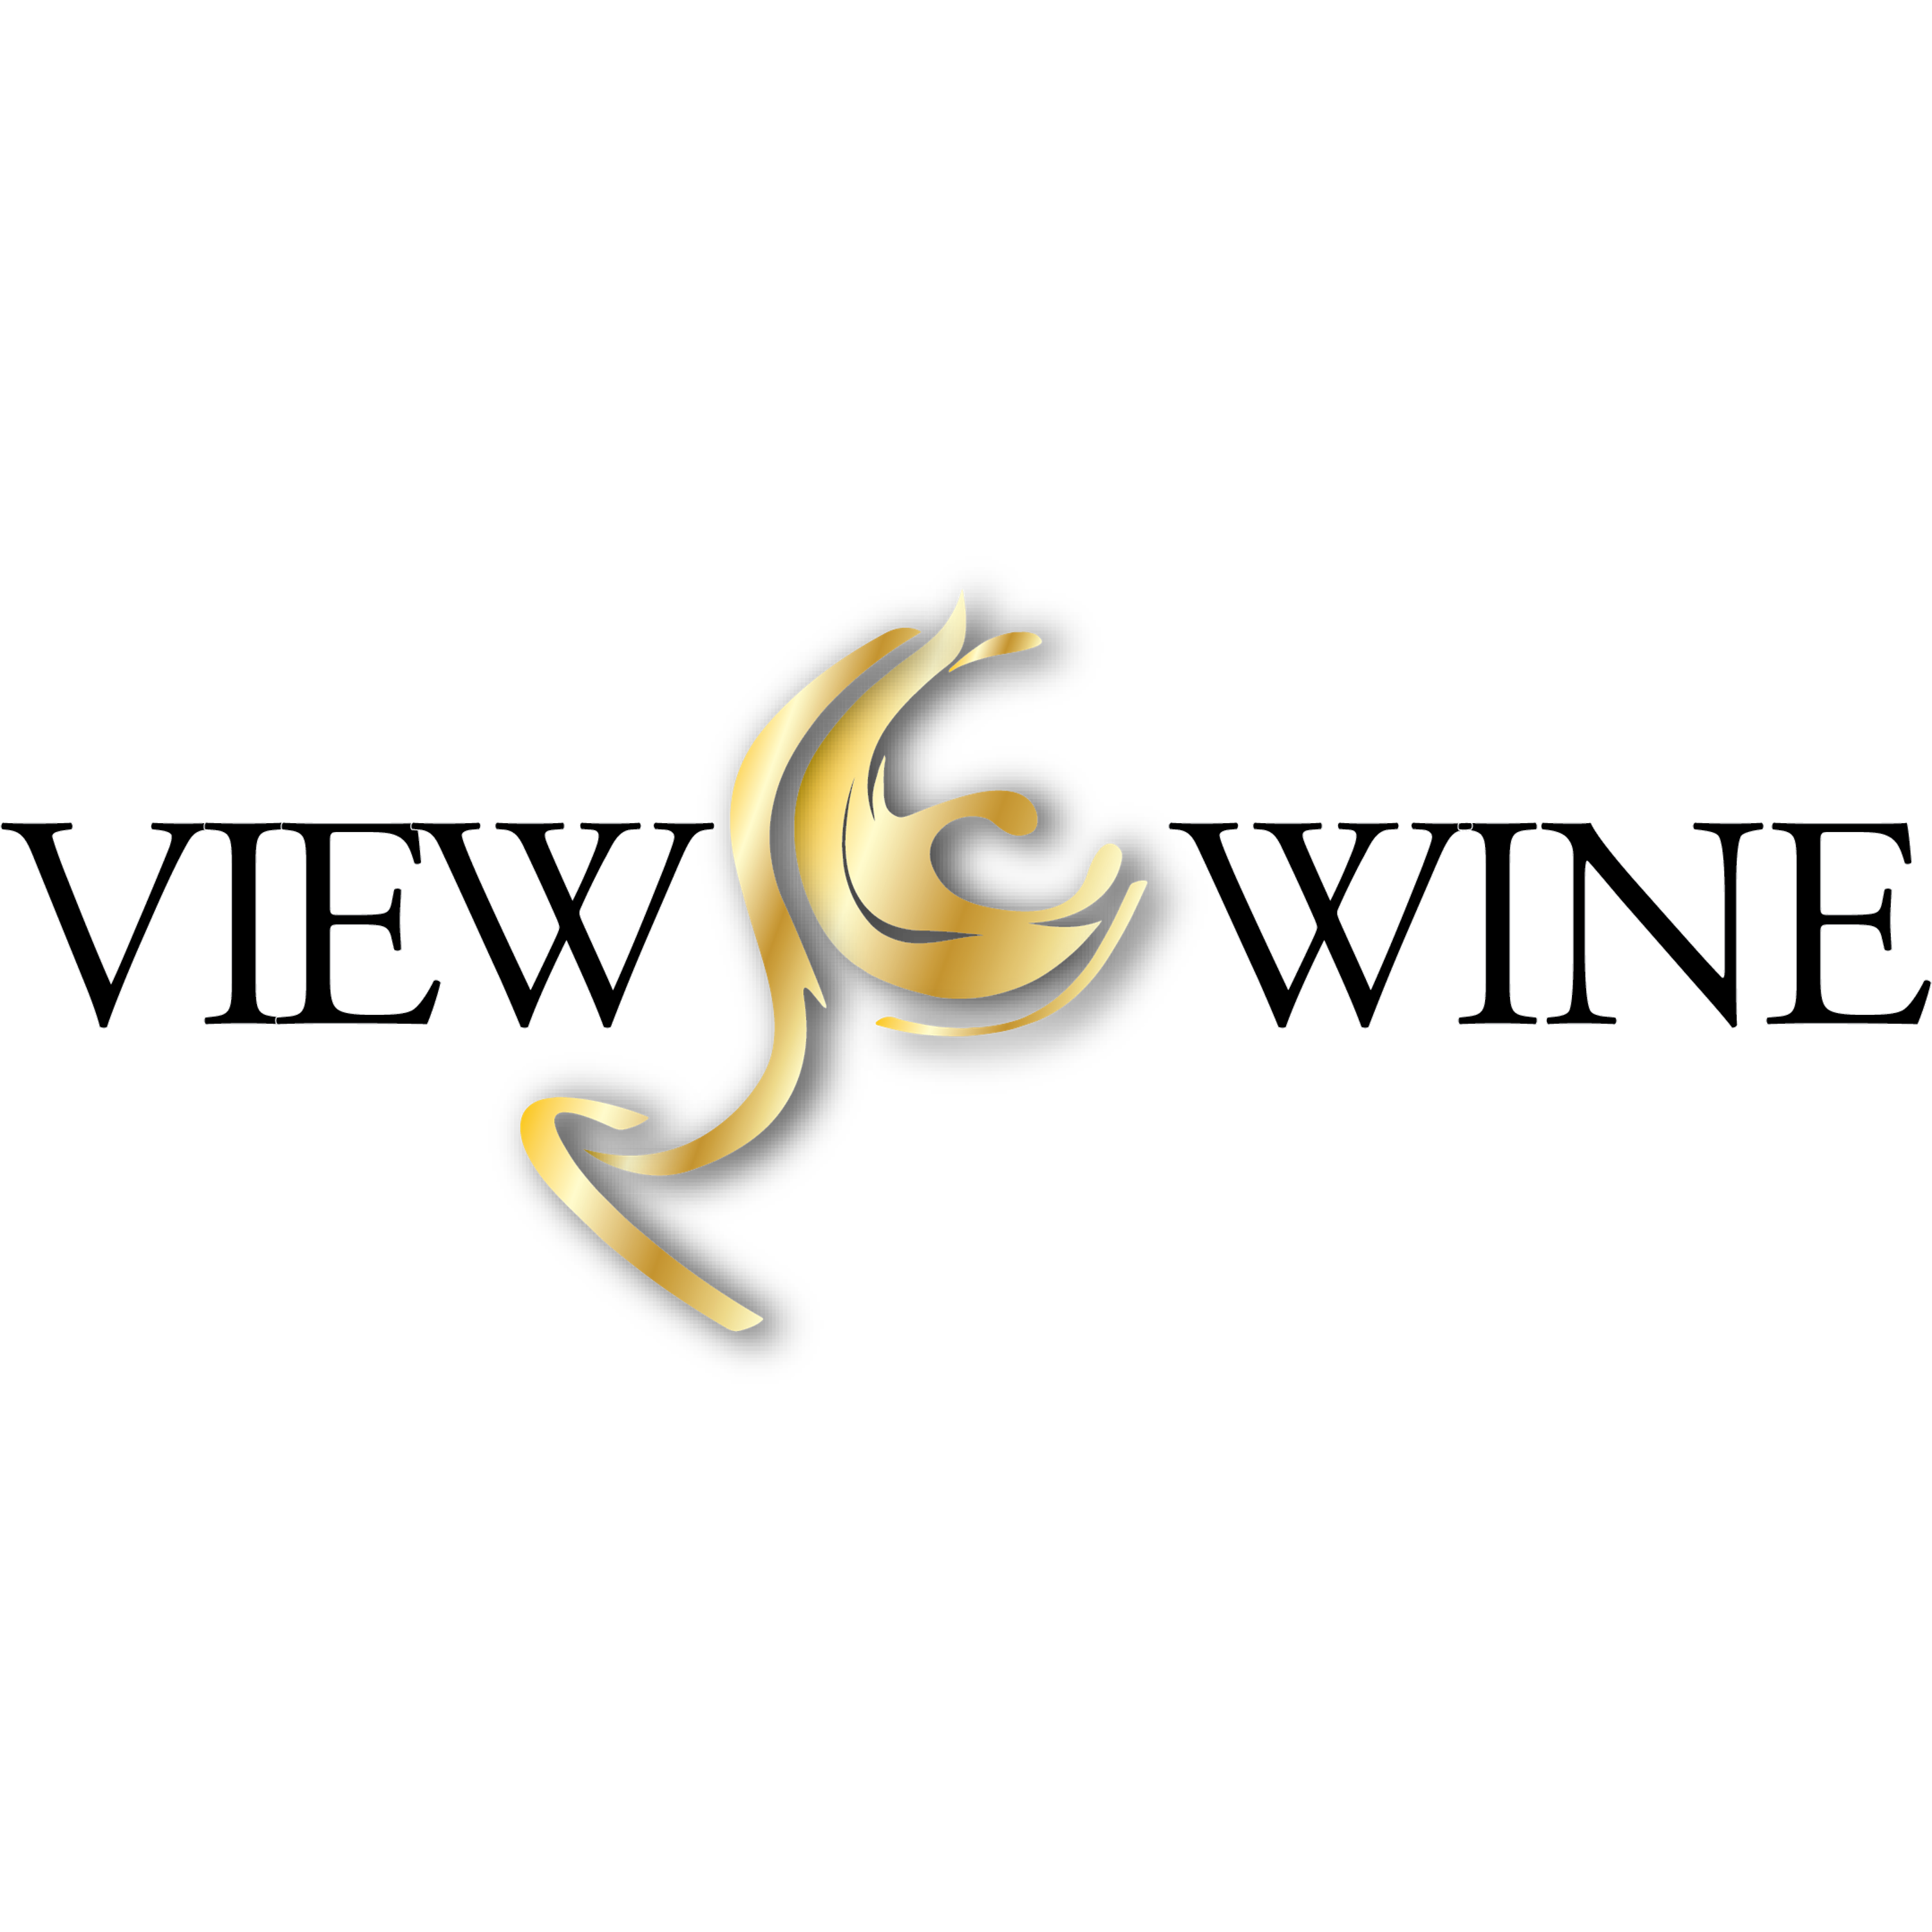 View Wine logo